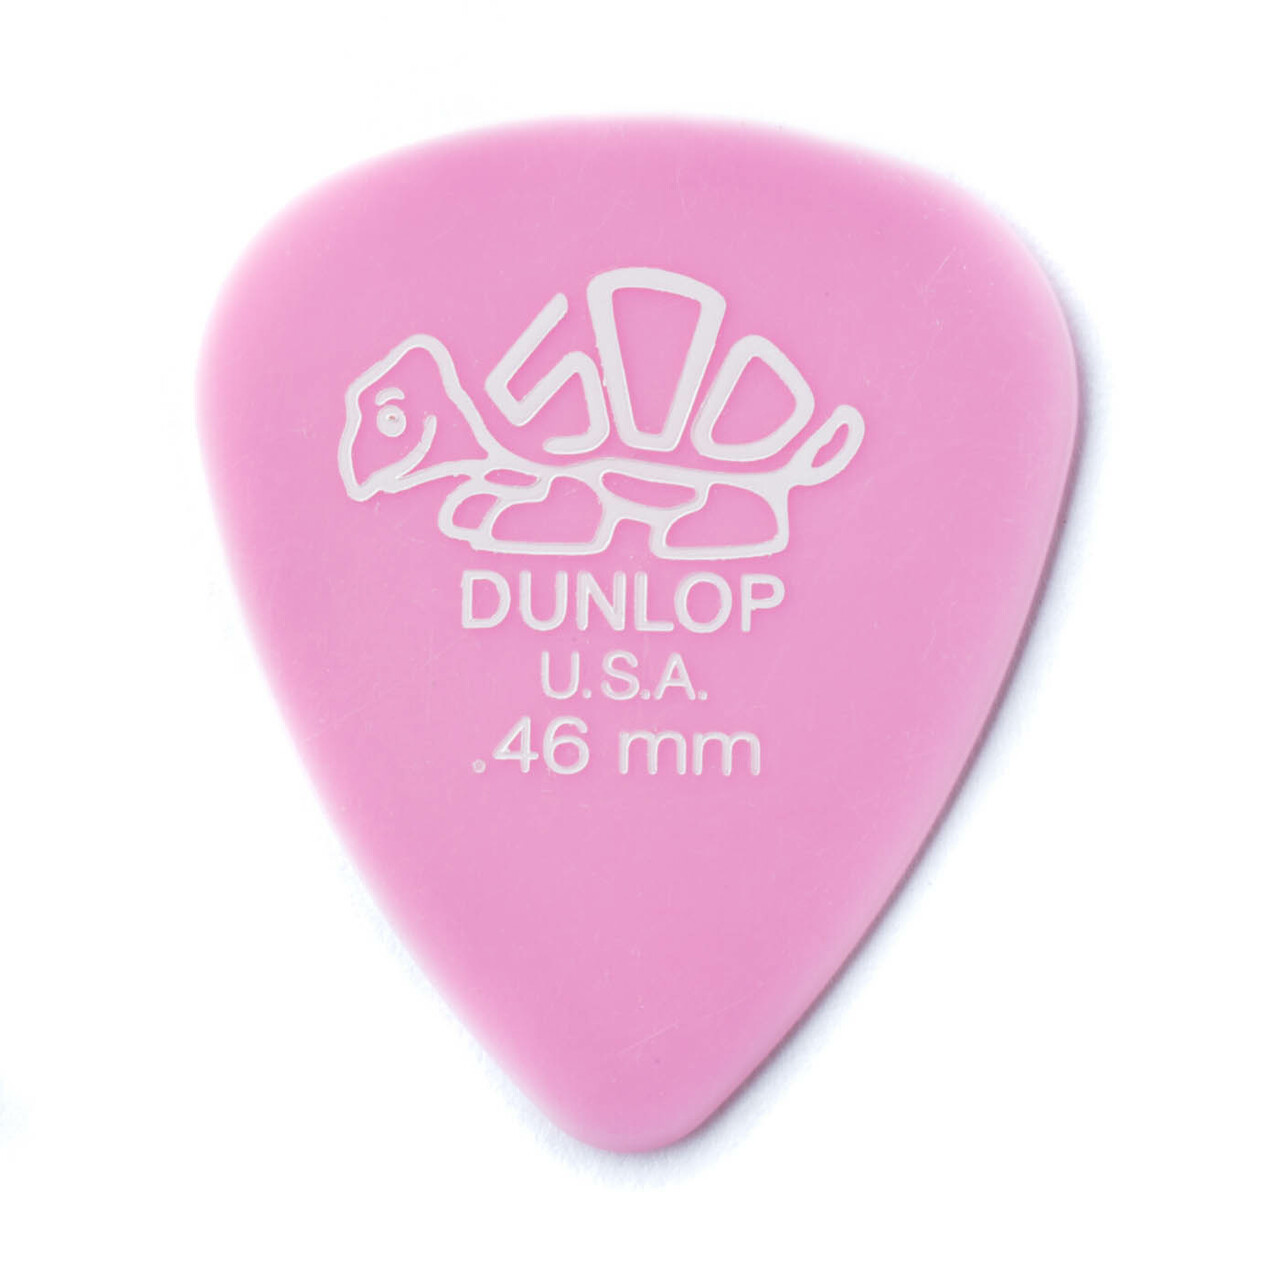 Dunlop 던롭 델린 피크 스탠다드 0.46mm